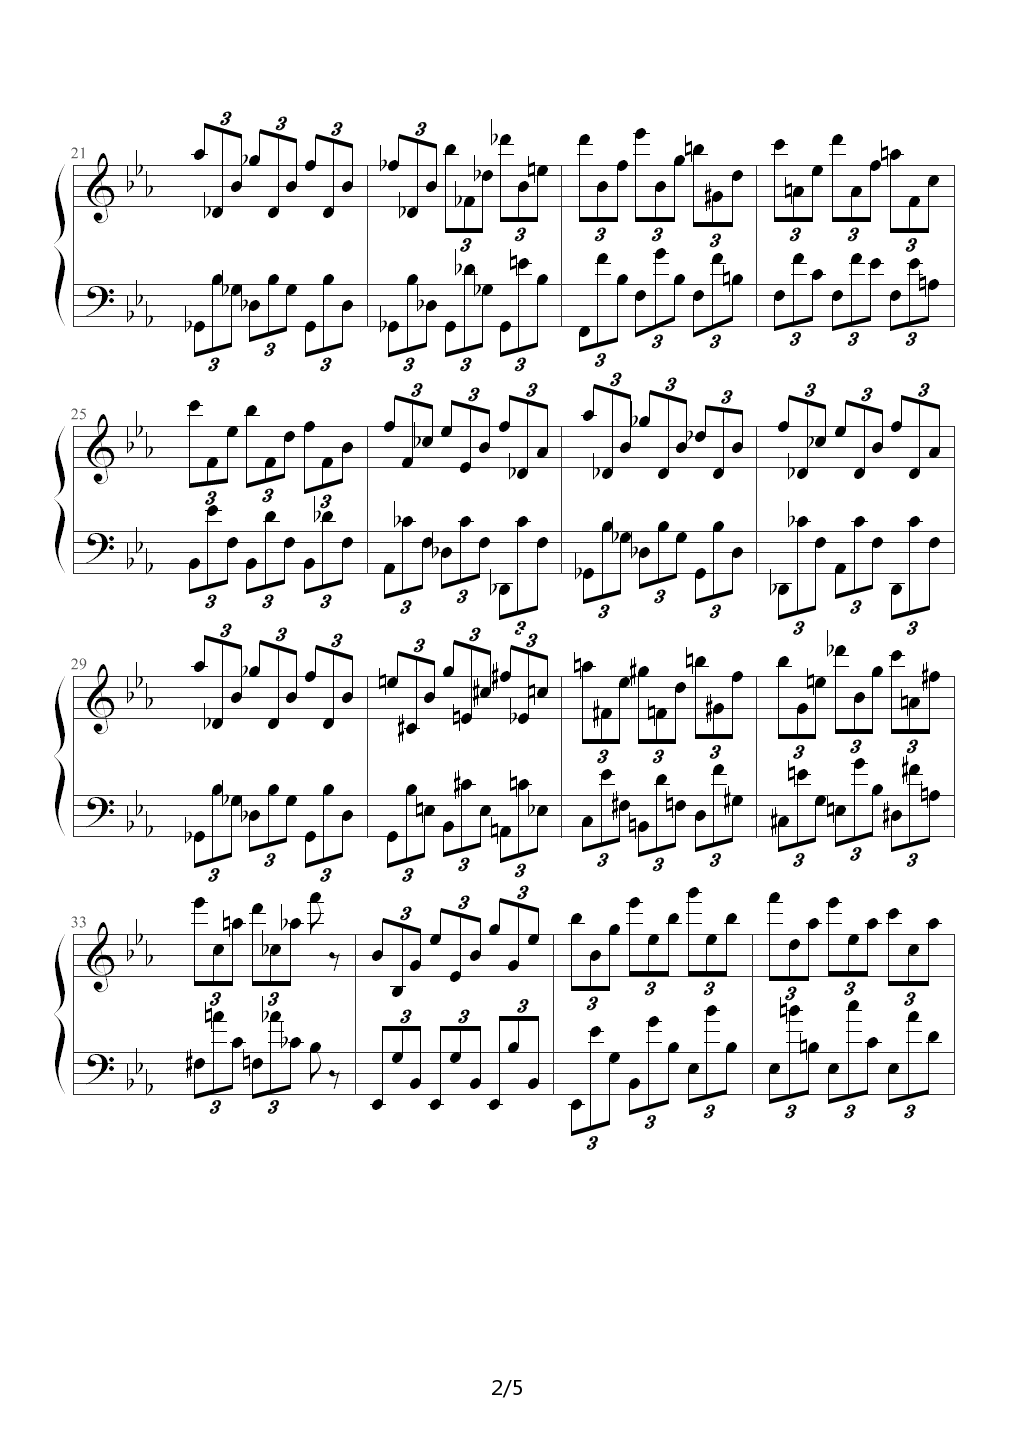 Prelude in E Major钢琴谱|Prelude in E Major最新钢琴谱|Prelude in E Major钢琴谱下载